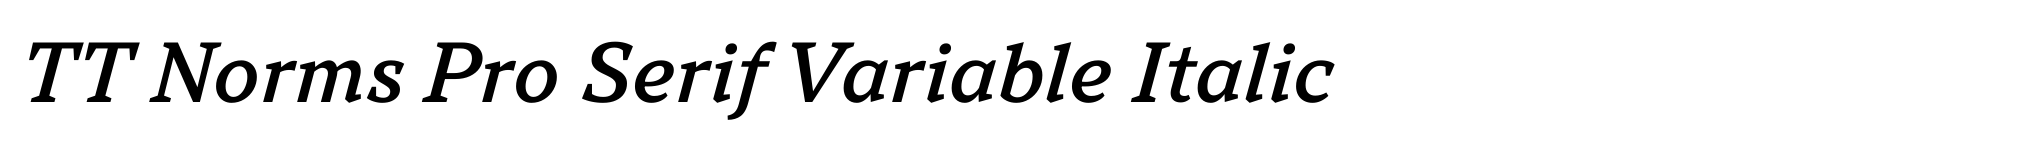 TT Norms Pro Serif Variable Italic image